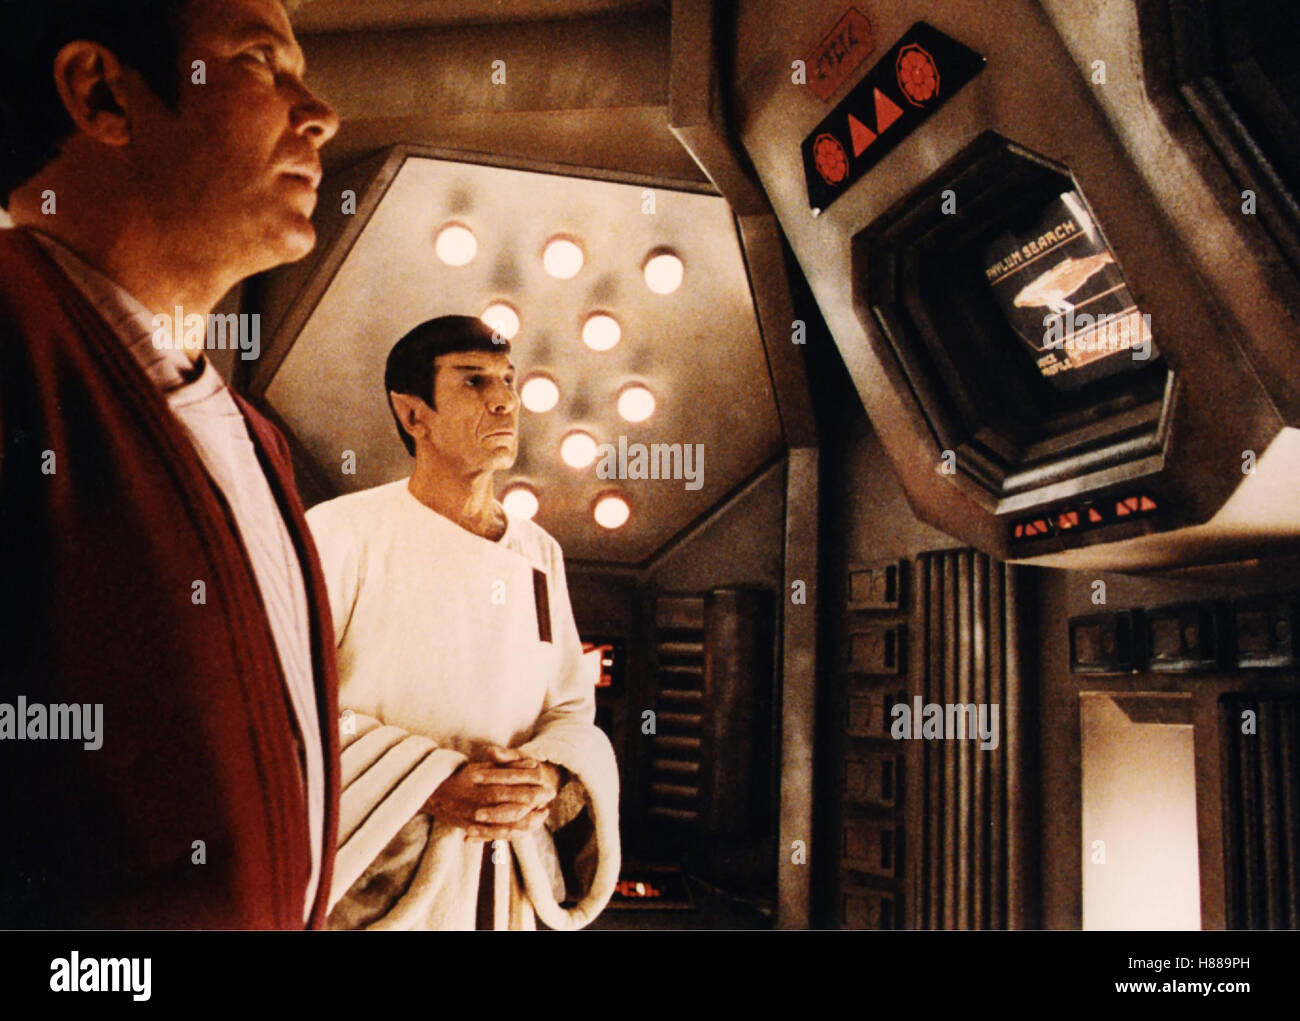 Star Trek IV - Zurück in die Gegenwart, (STAR TREK IV - THE VOYAGE HOME) USA 1986, Leonard Nimoy, WILLIAM SHATNER, LEONARD NIMOY, Stichwort: Kirk, Spock Stock Photo